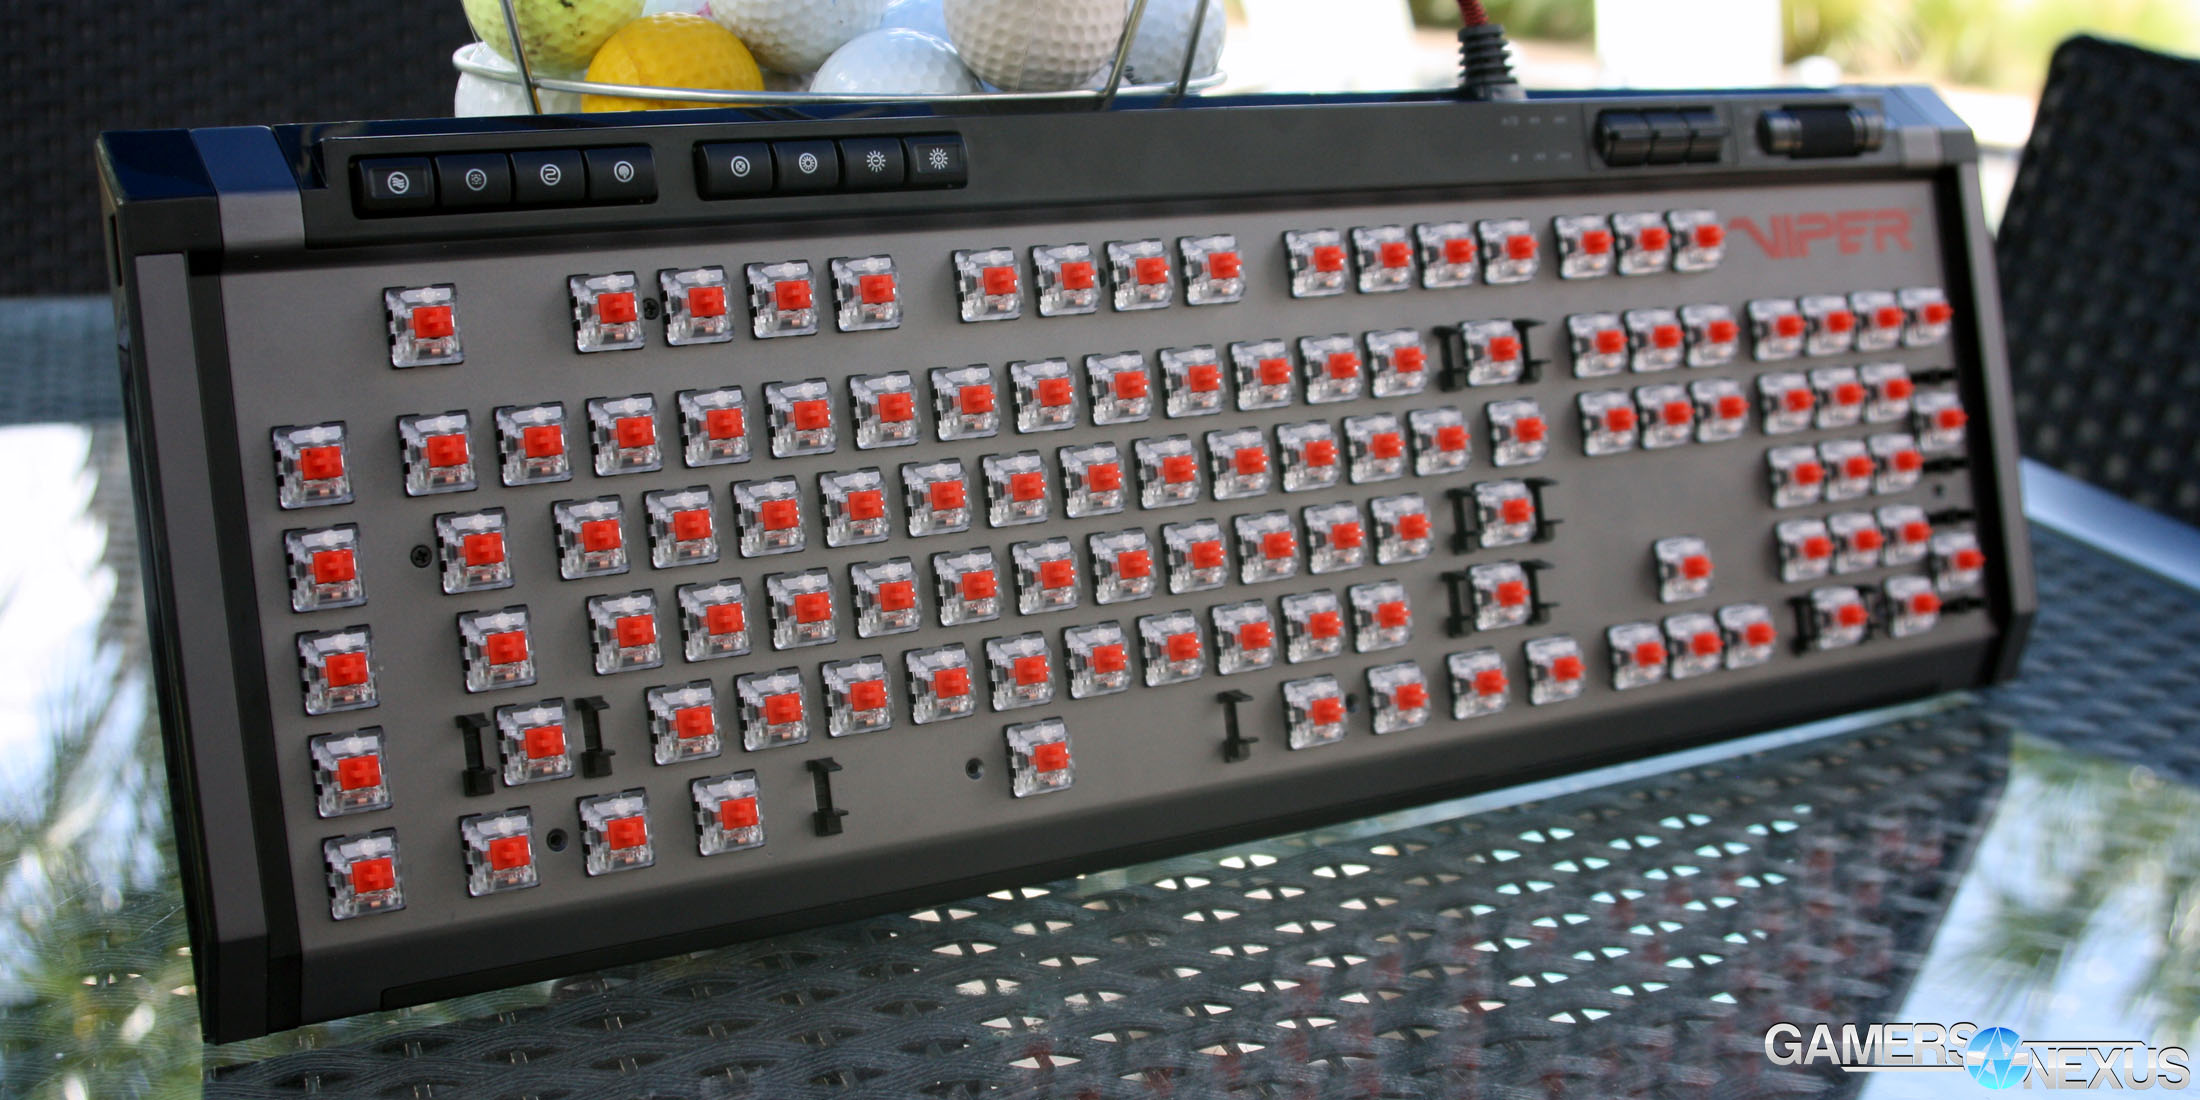 v770 keyboard nocaps